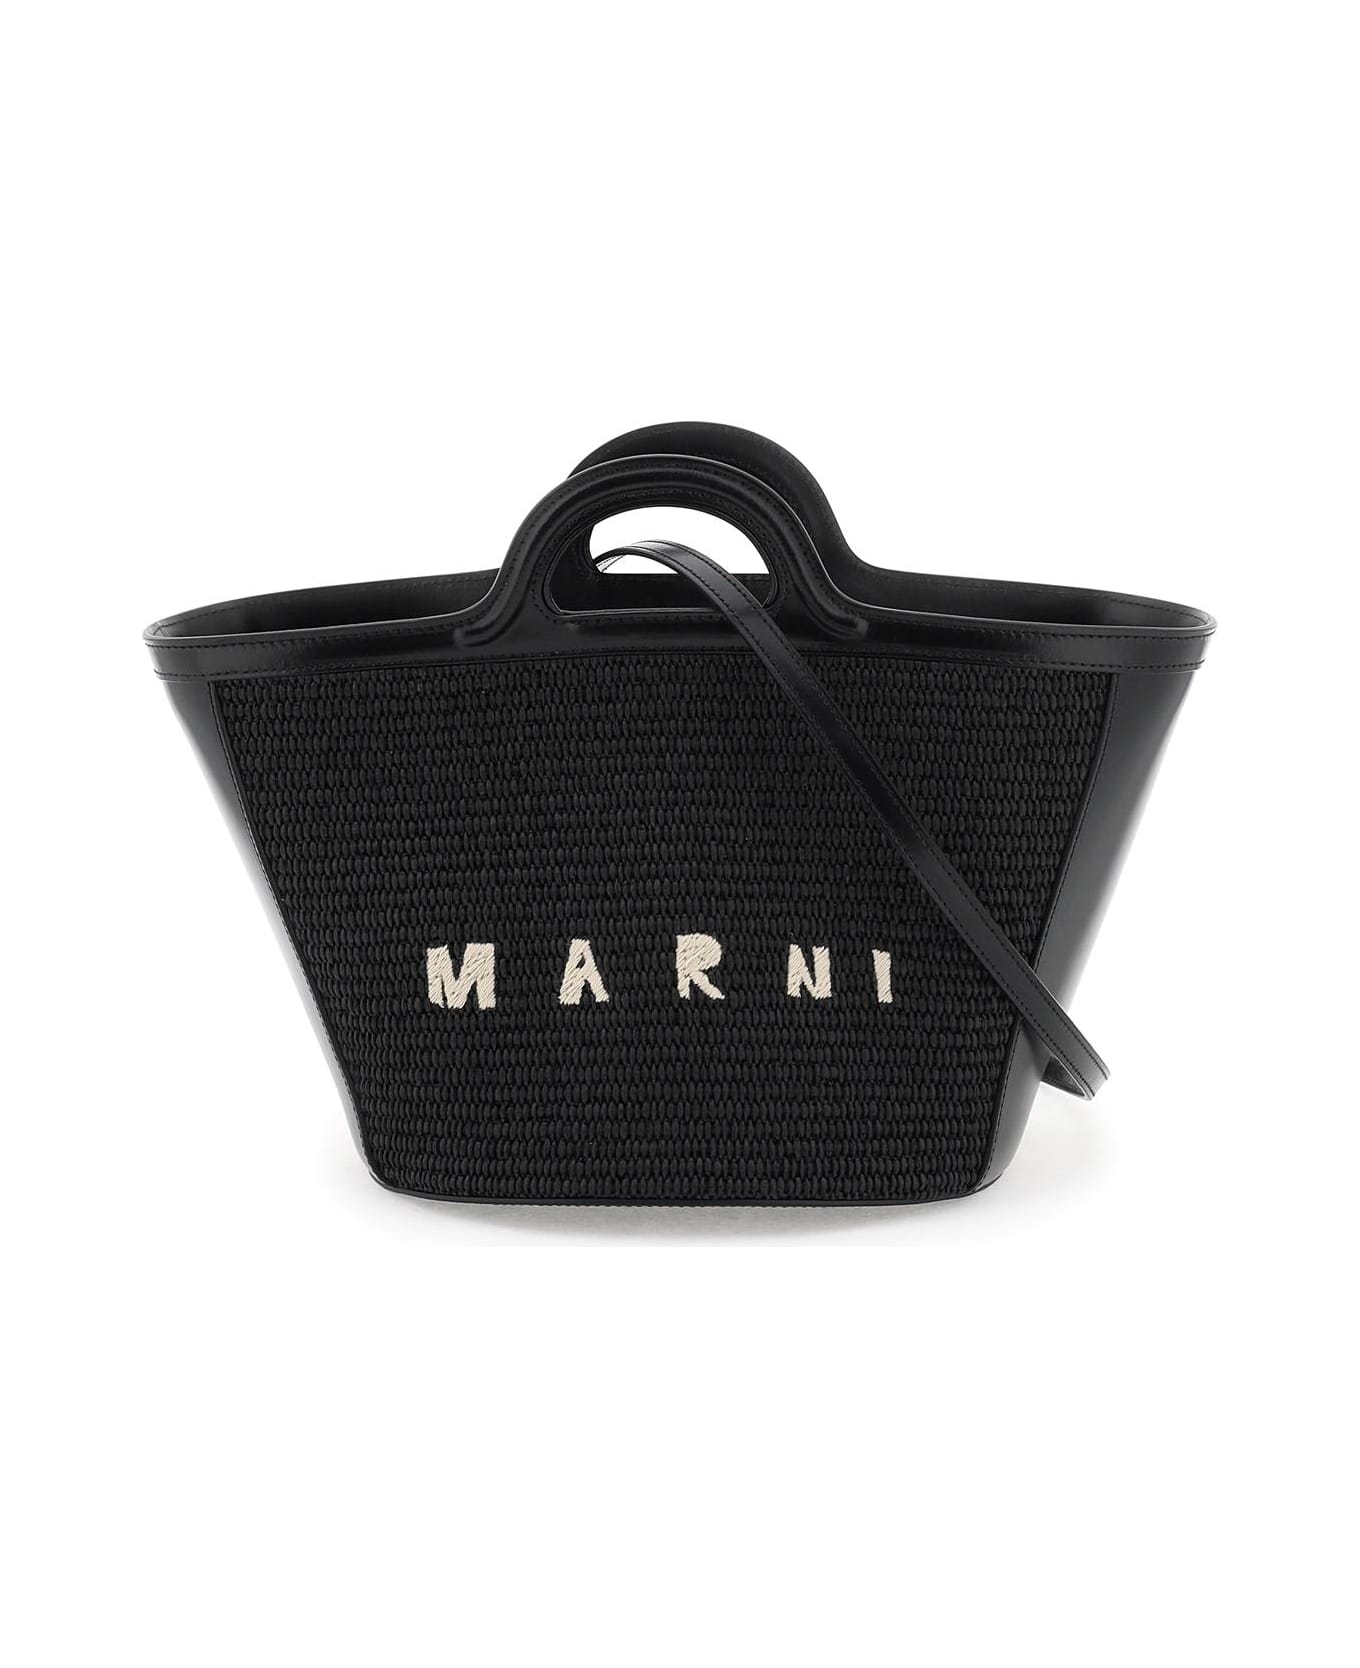 Marni 'tropicalia' Small Tote Bag - Black